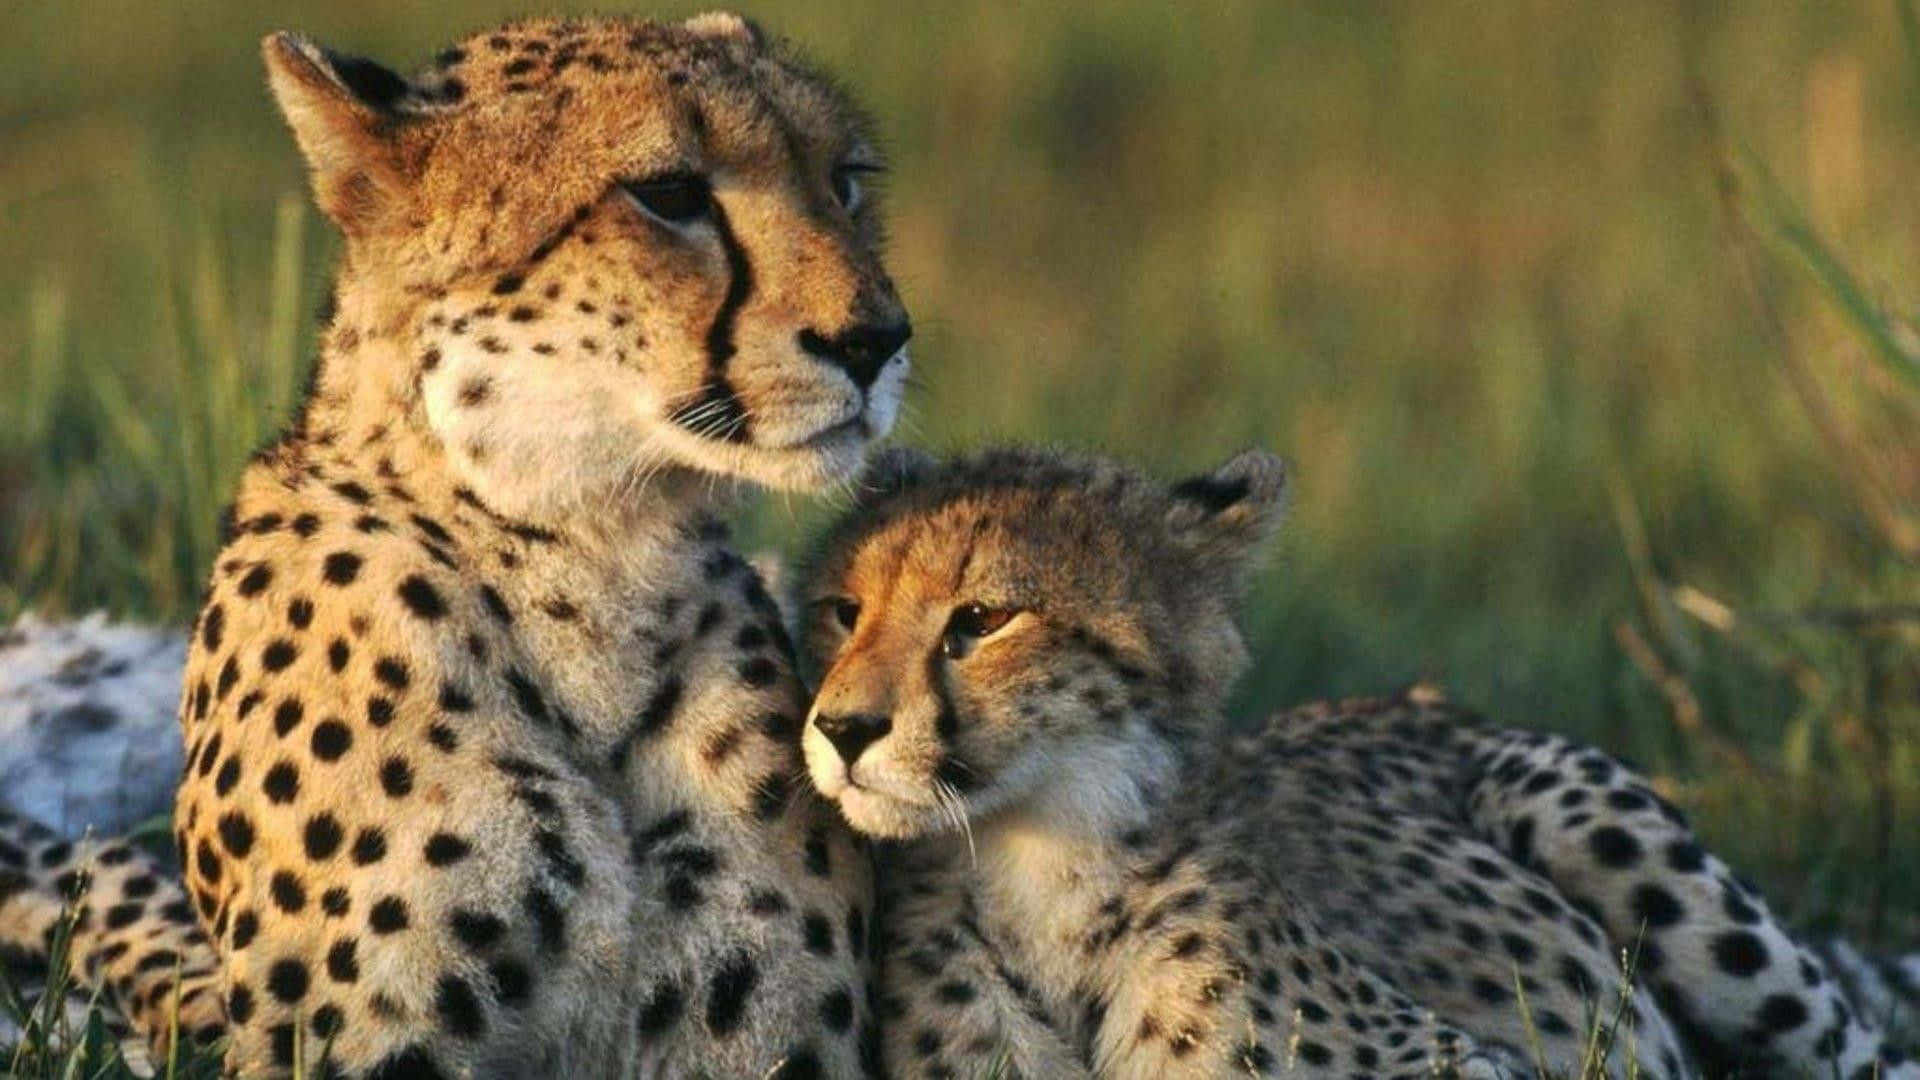 A stunning cheetah amidst the wilderness